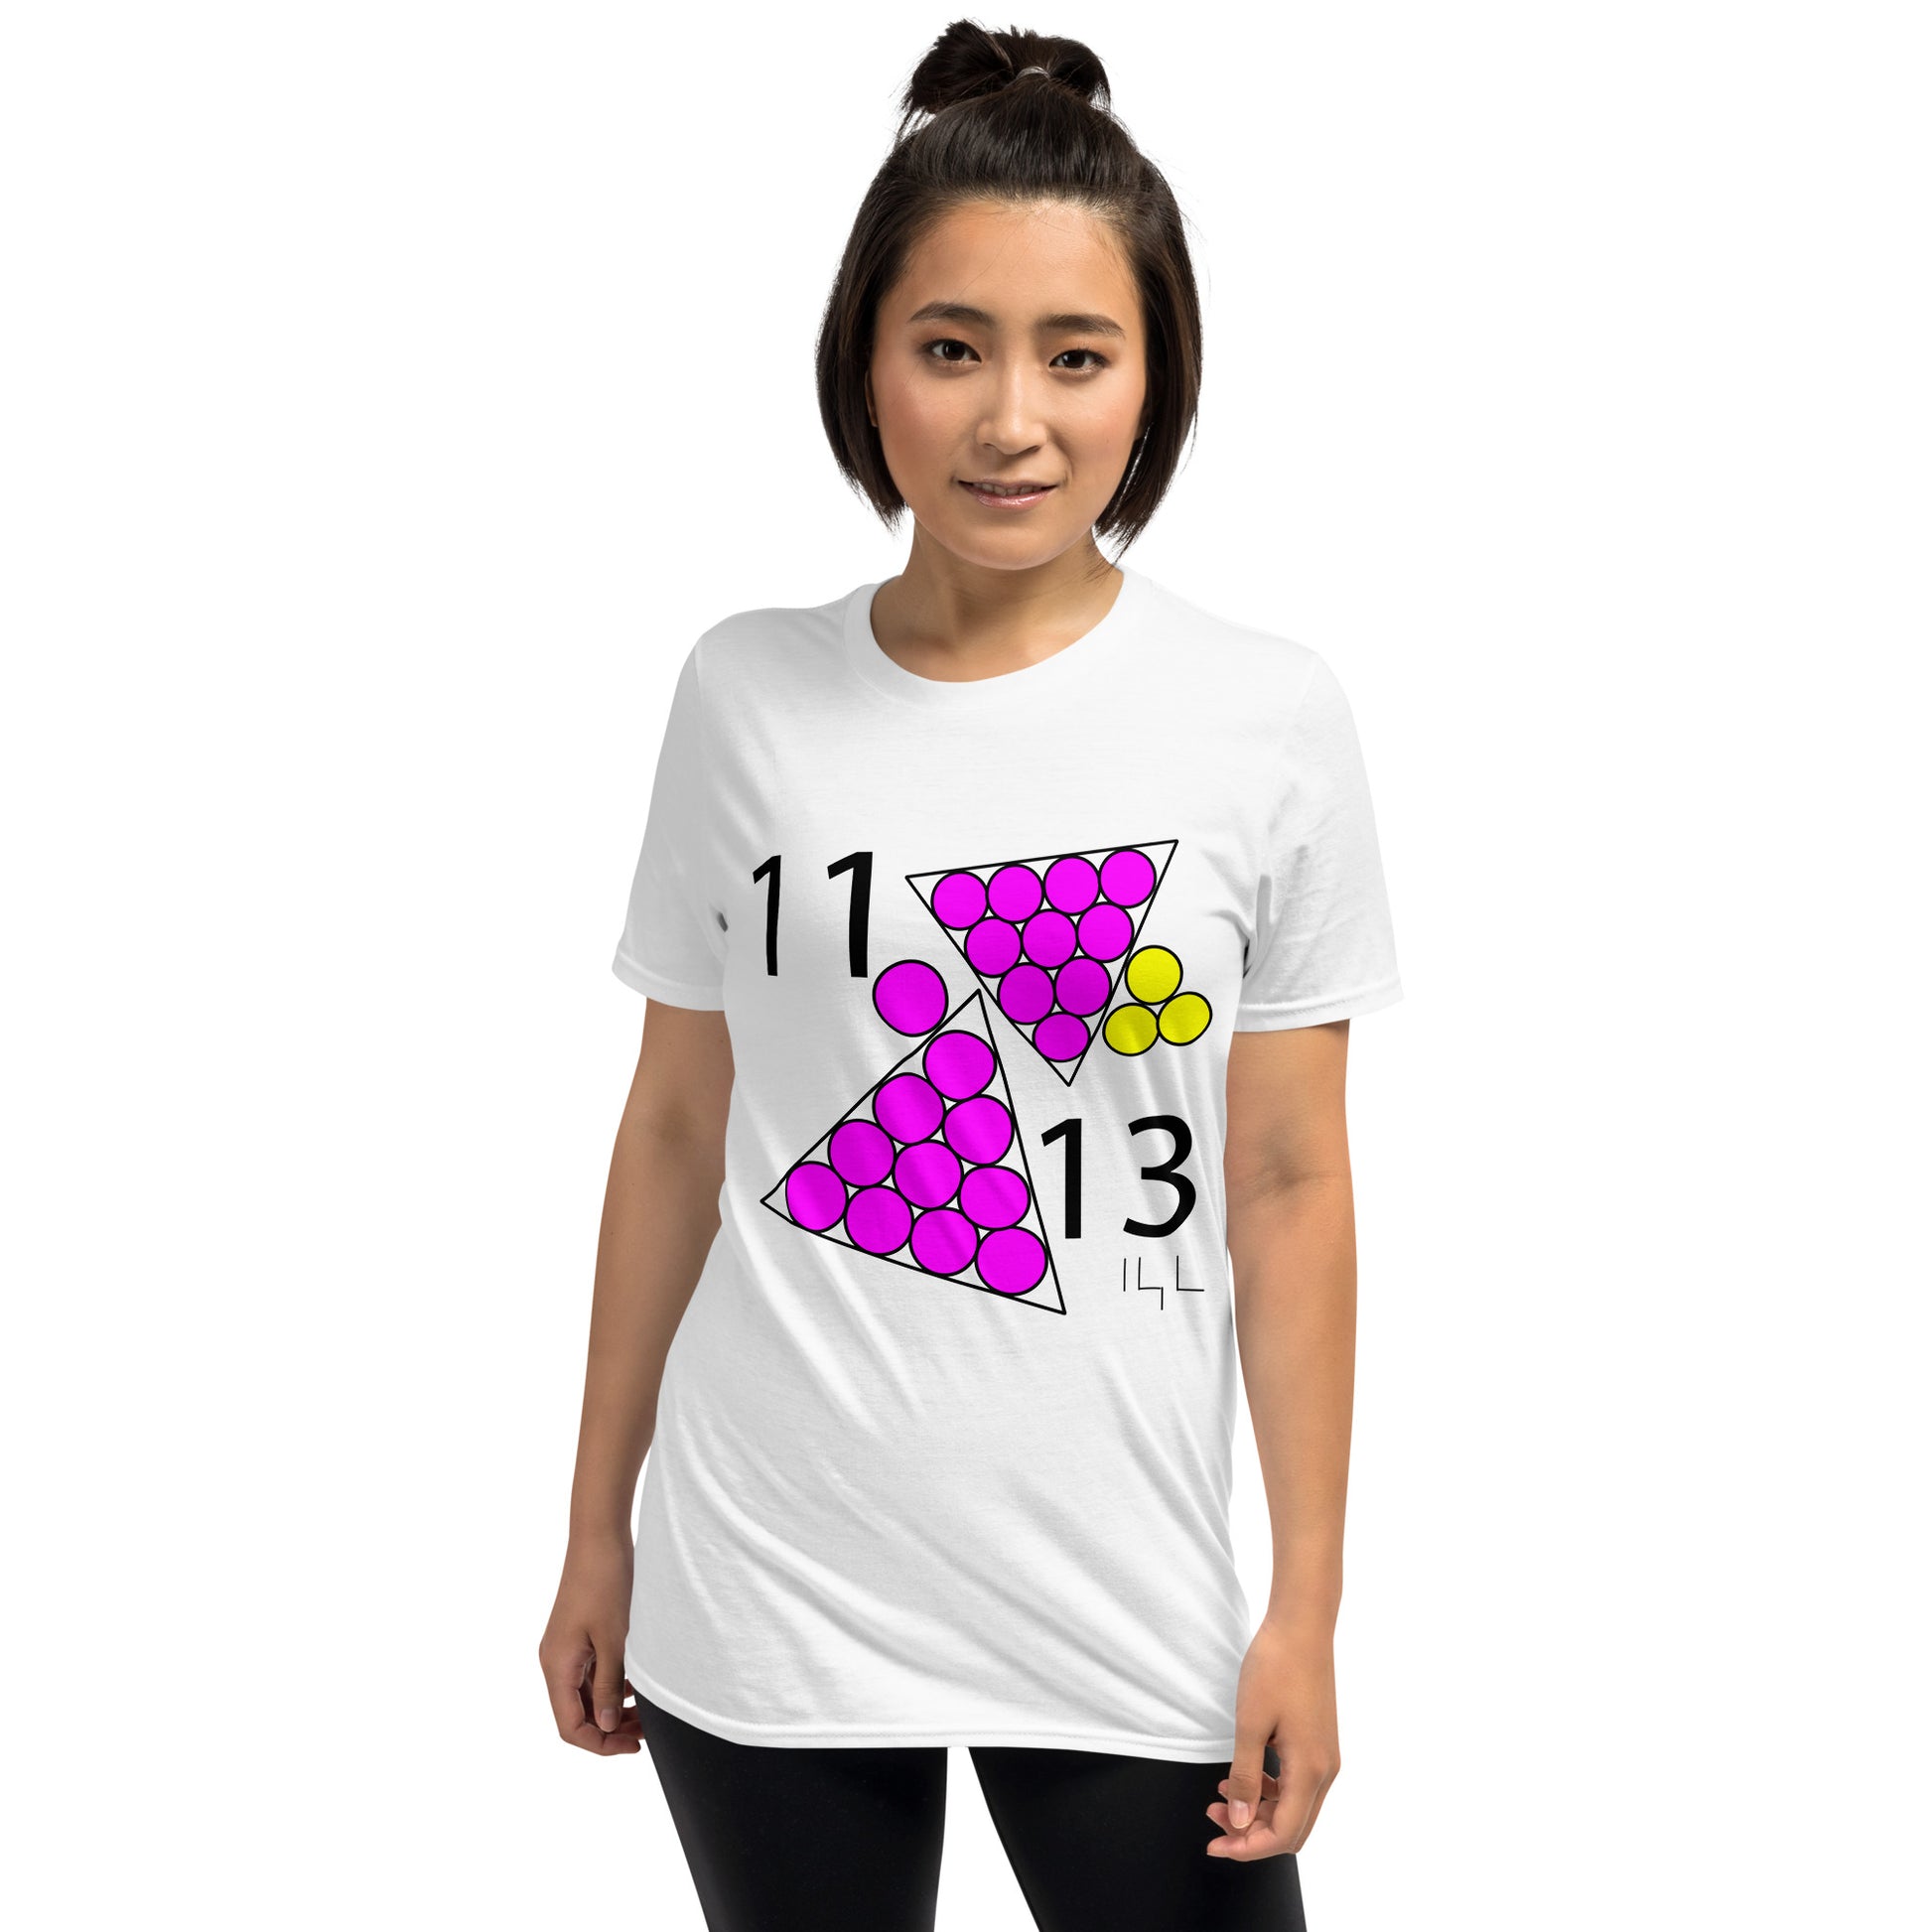 November 13th Pink T-Shirt at 11:13 1113 - -Lighten Your Life [ItsAboutTime.Life][date]